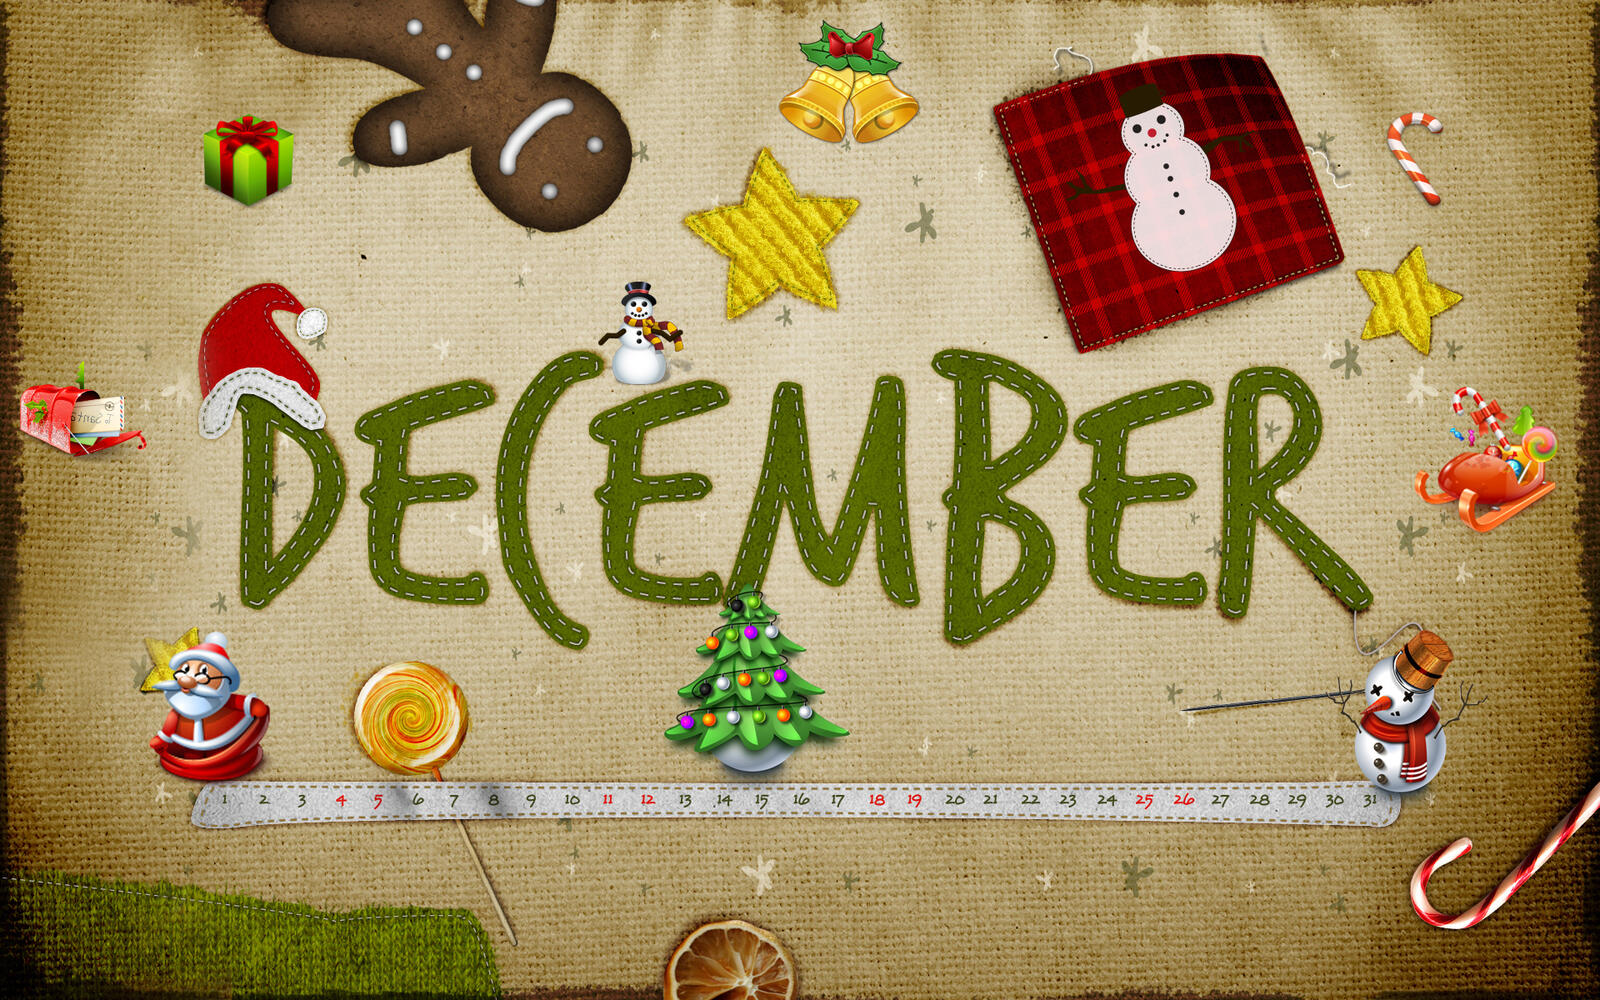 Wallpapers screensaver December month on the desktop